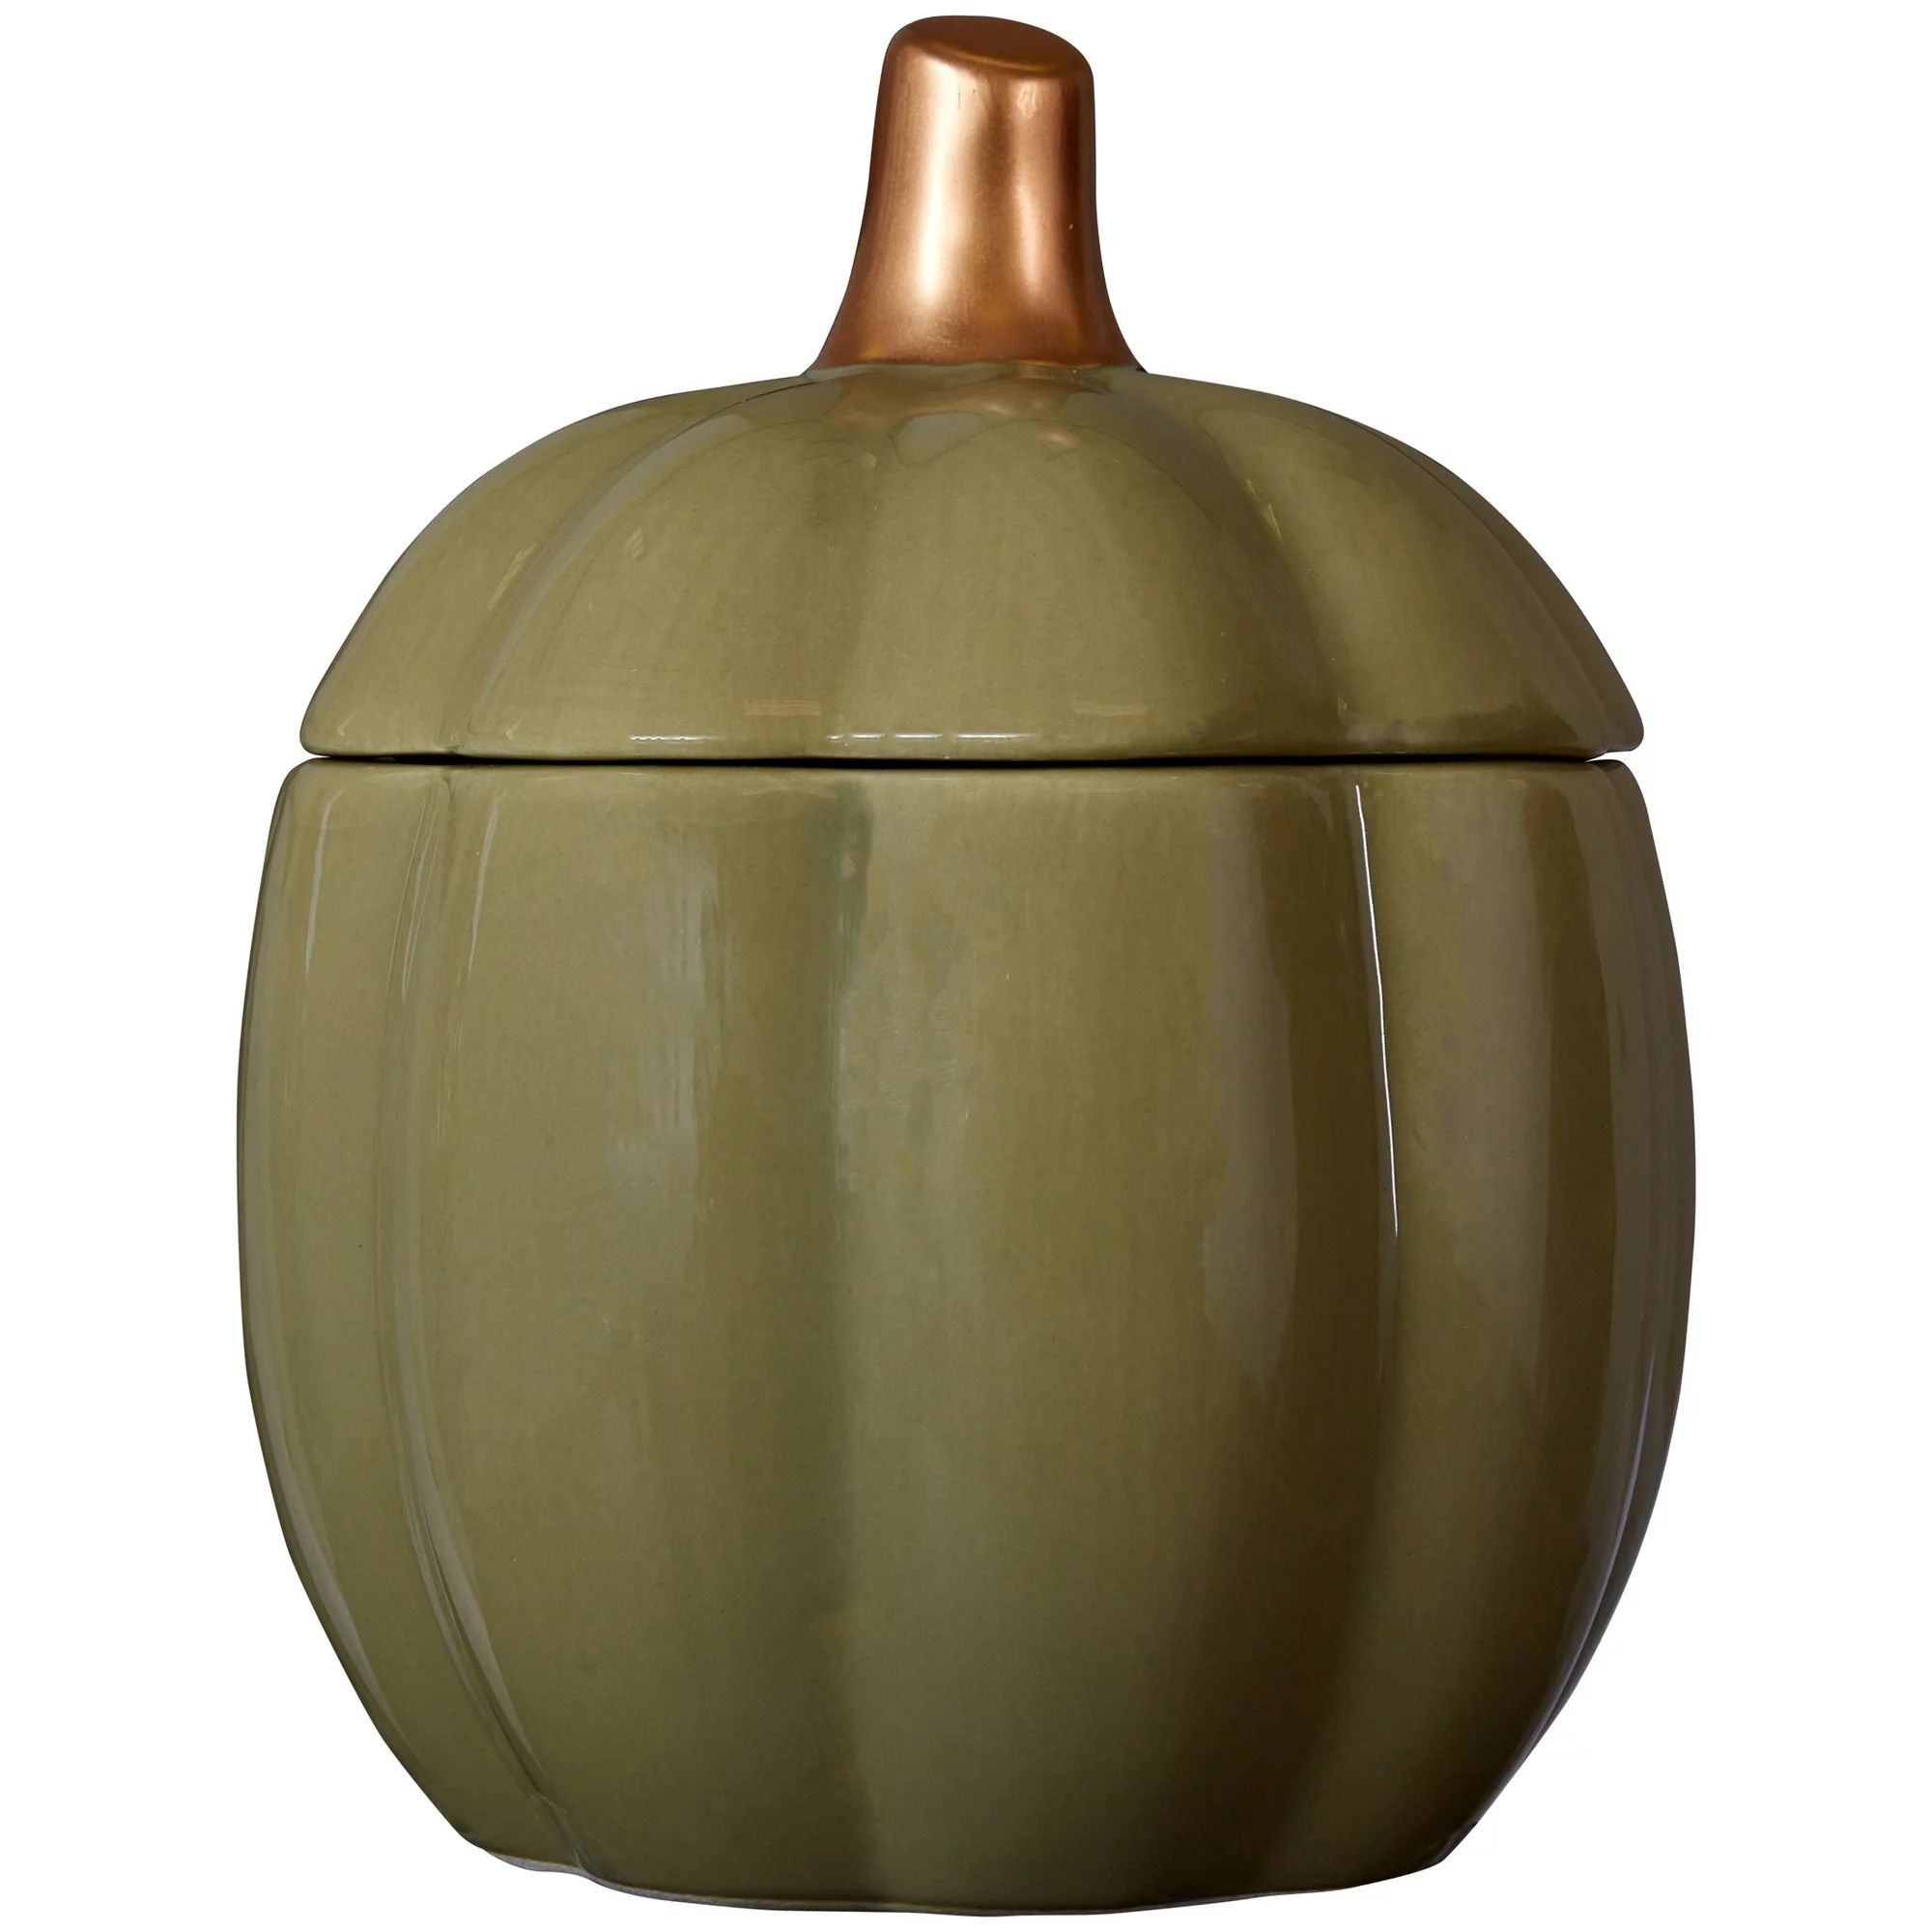 Harvest Tabletop Decoration, Ceramic Pumpkin Jar, Sage Green, 7 inch, Way to Celebrate | Walmart (US)